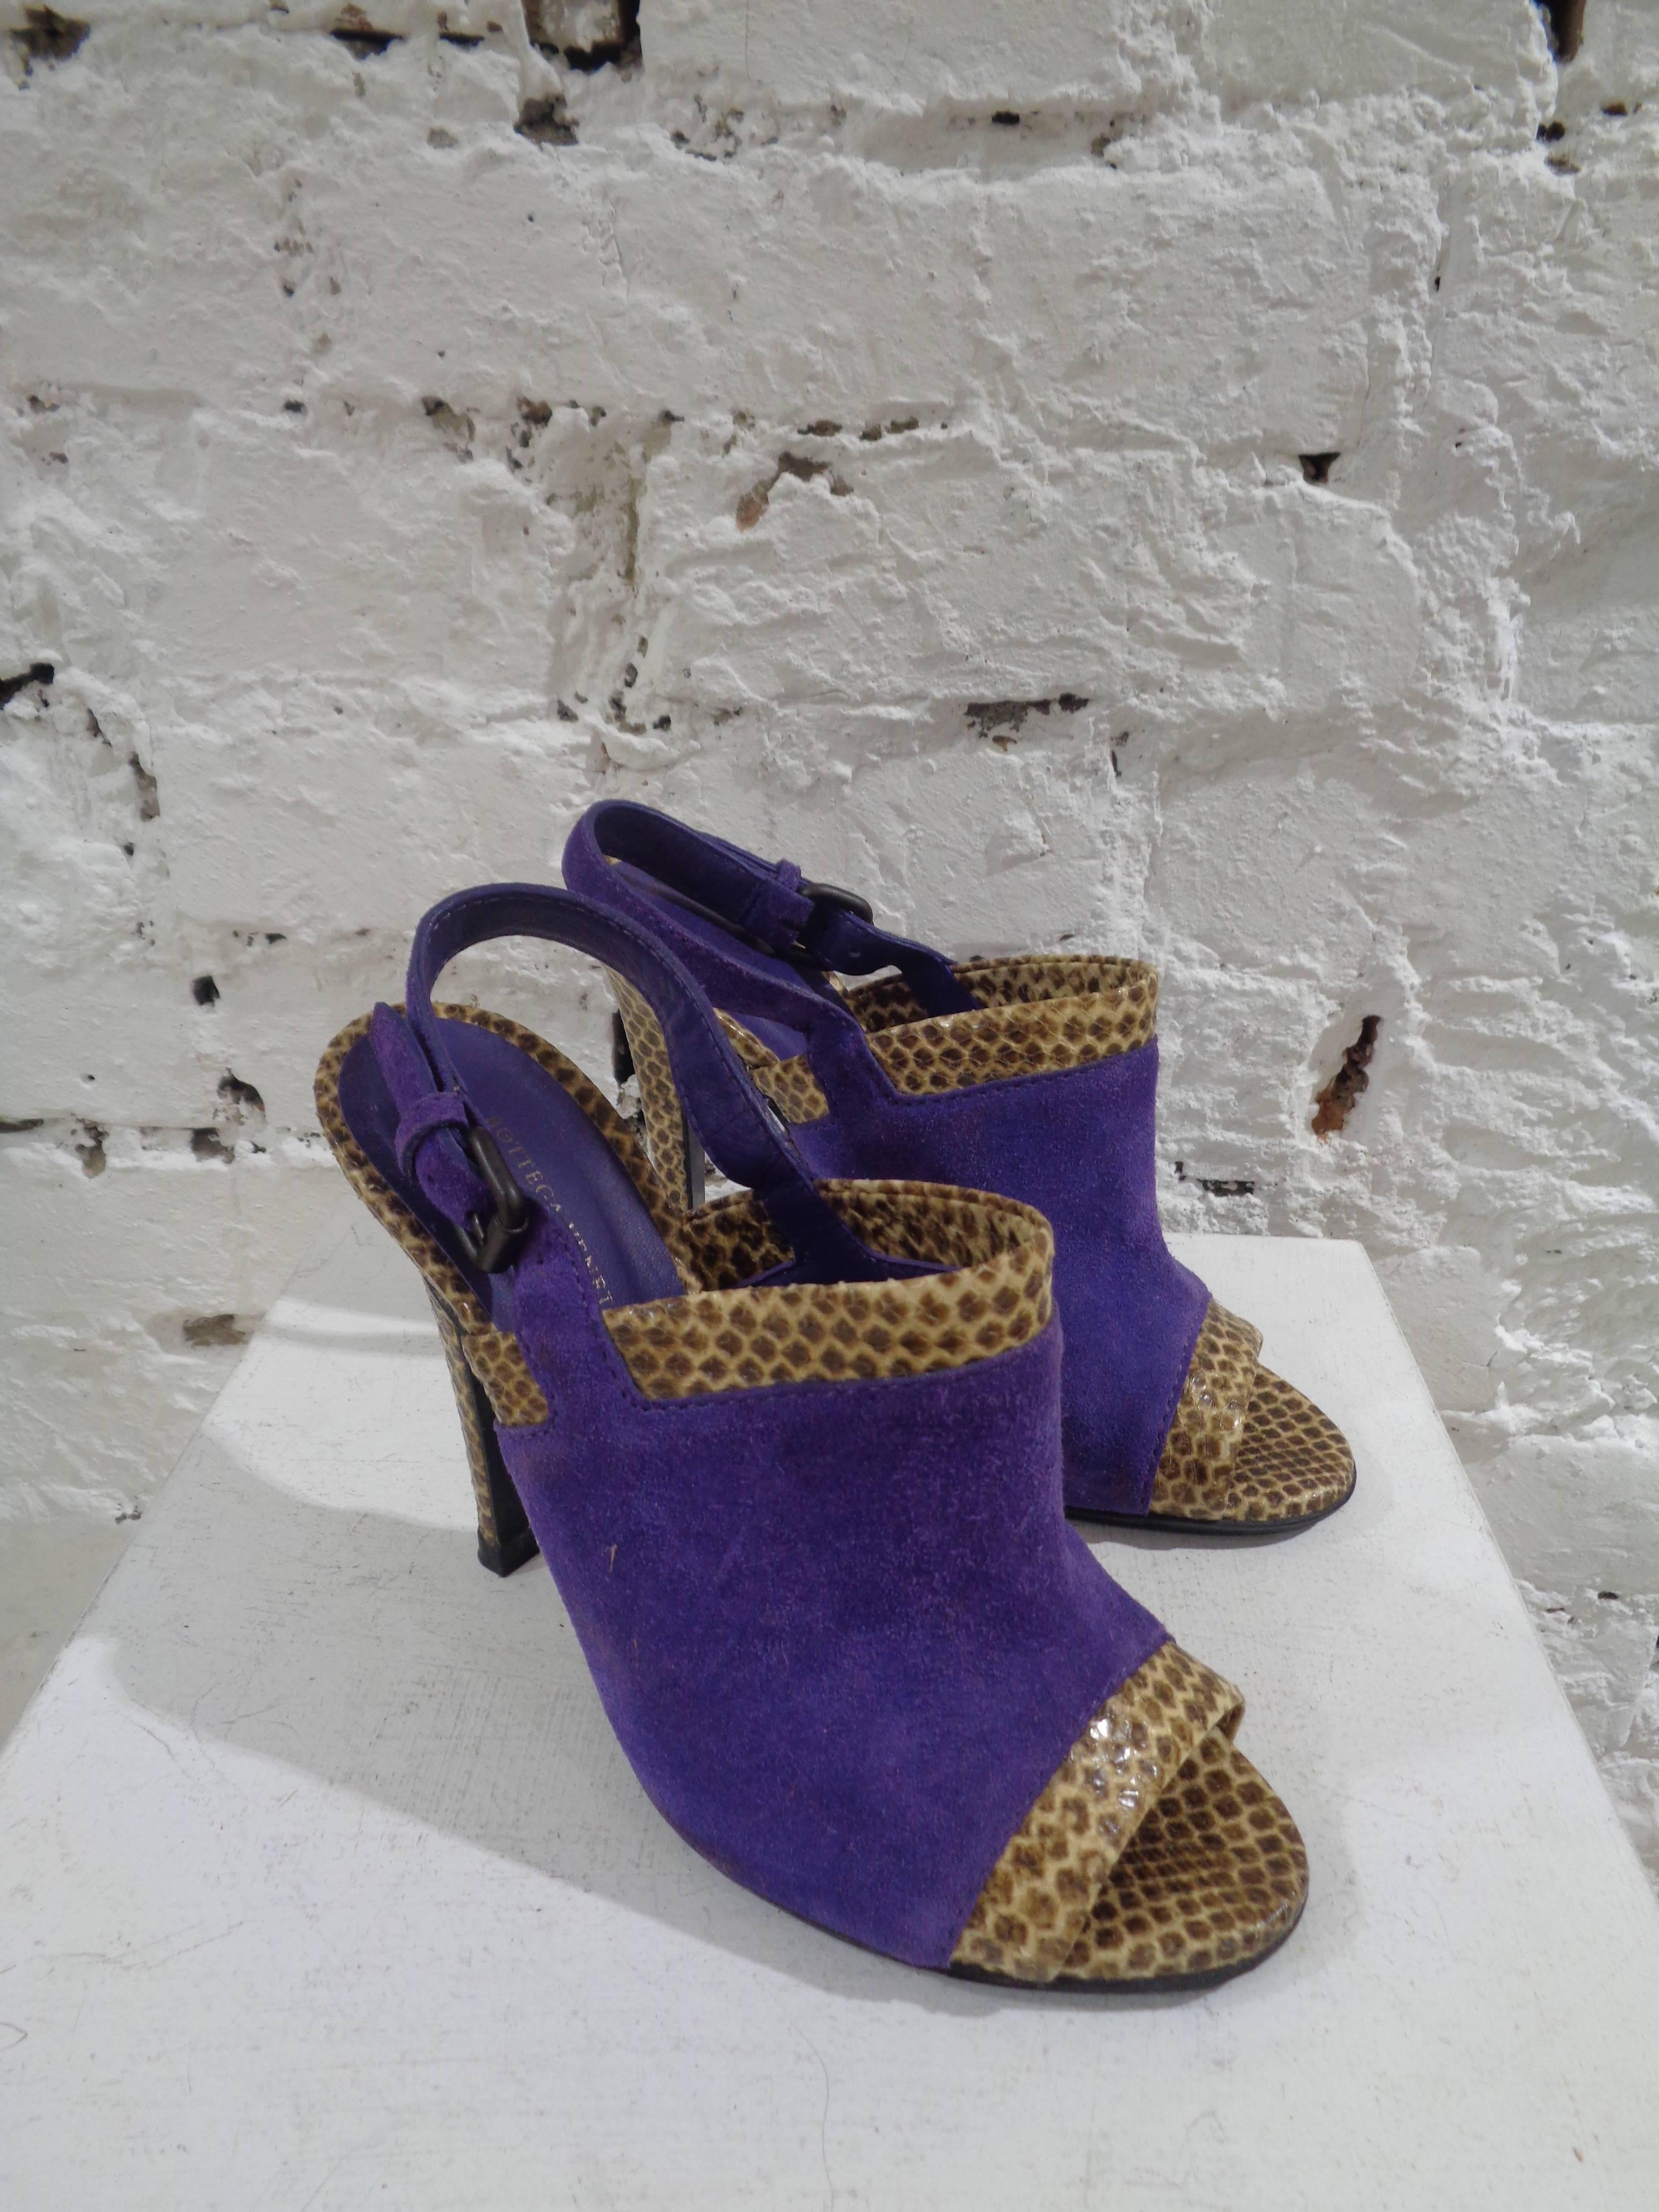 Bottega Veneta python skin purple velvet high heels unworn sandals

unworn still with box and totally made in italy in size 36.5